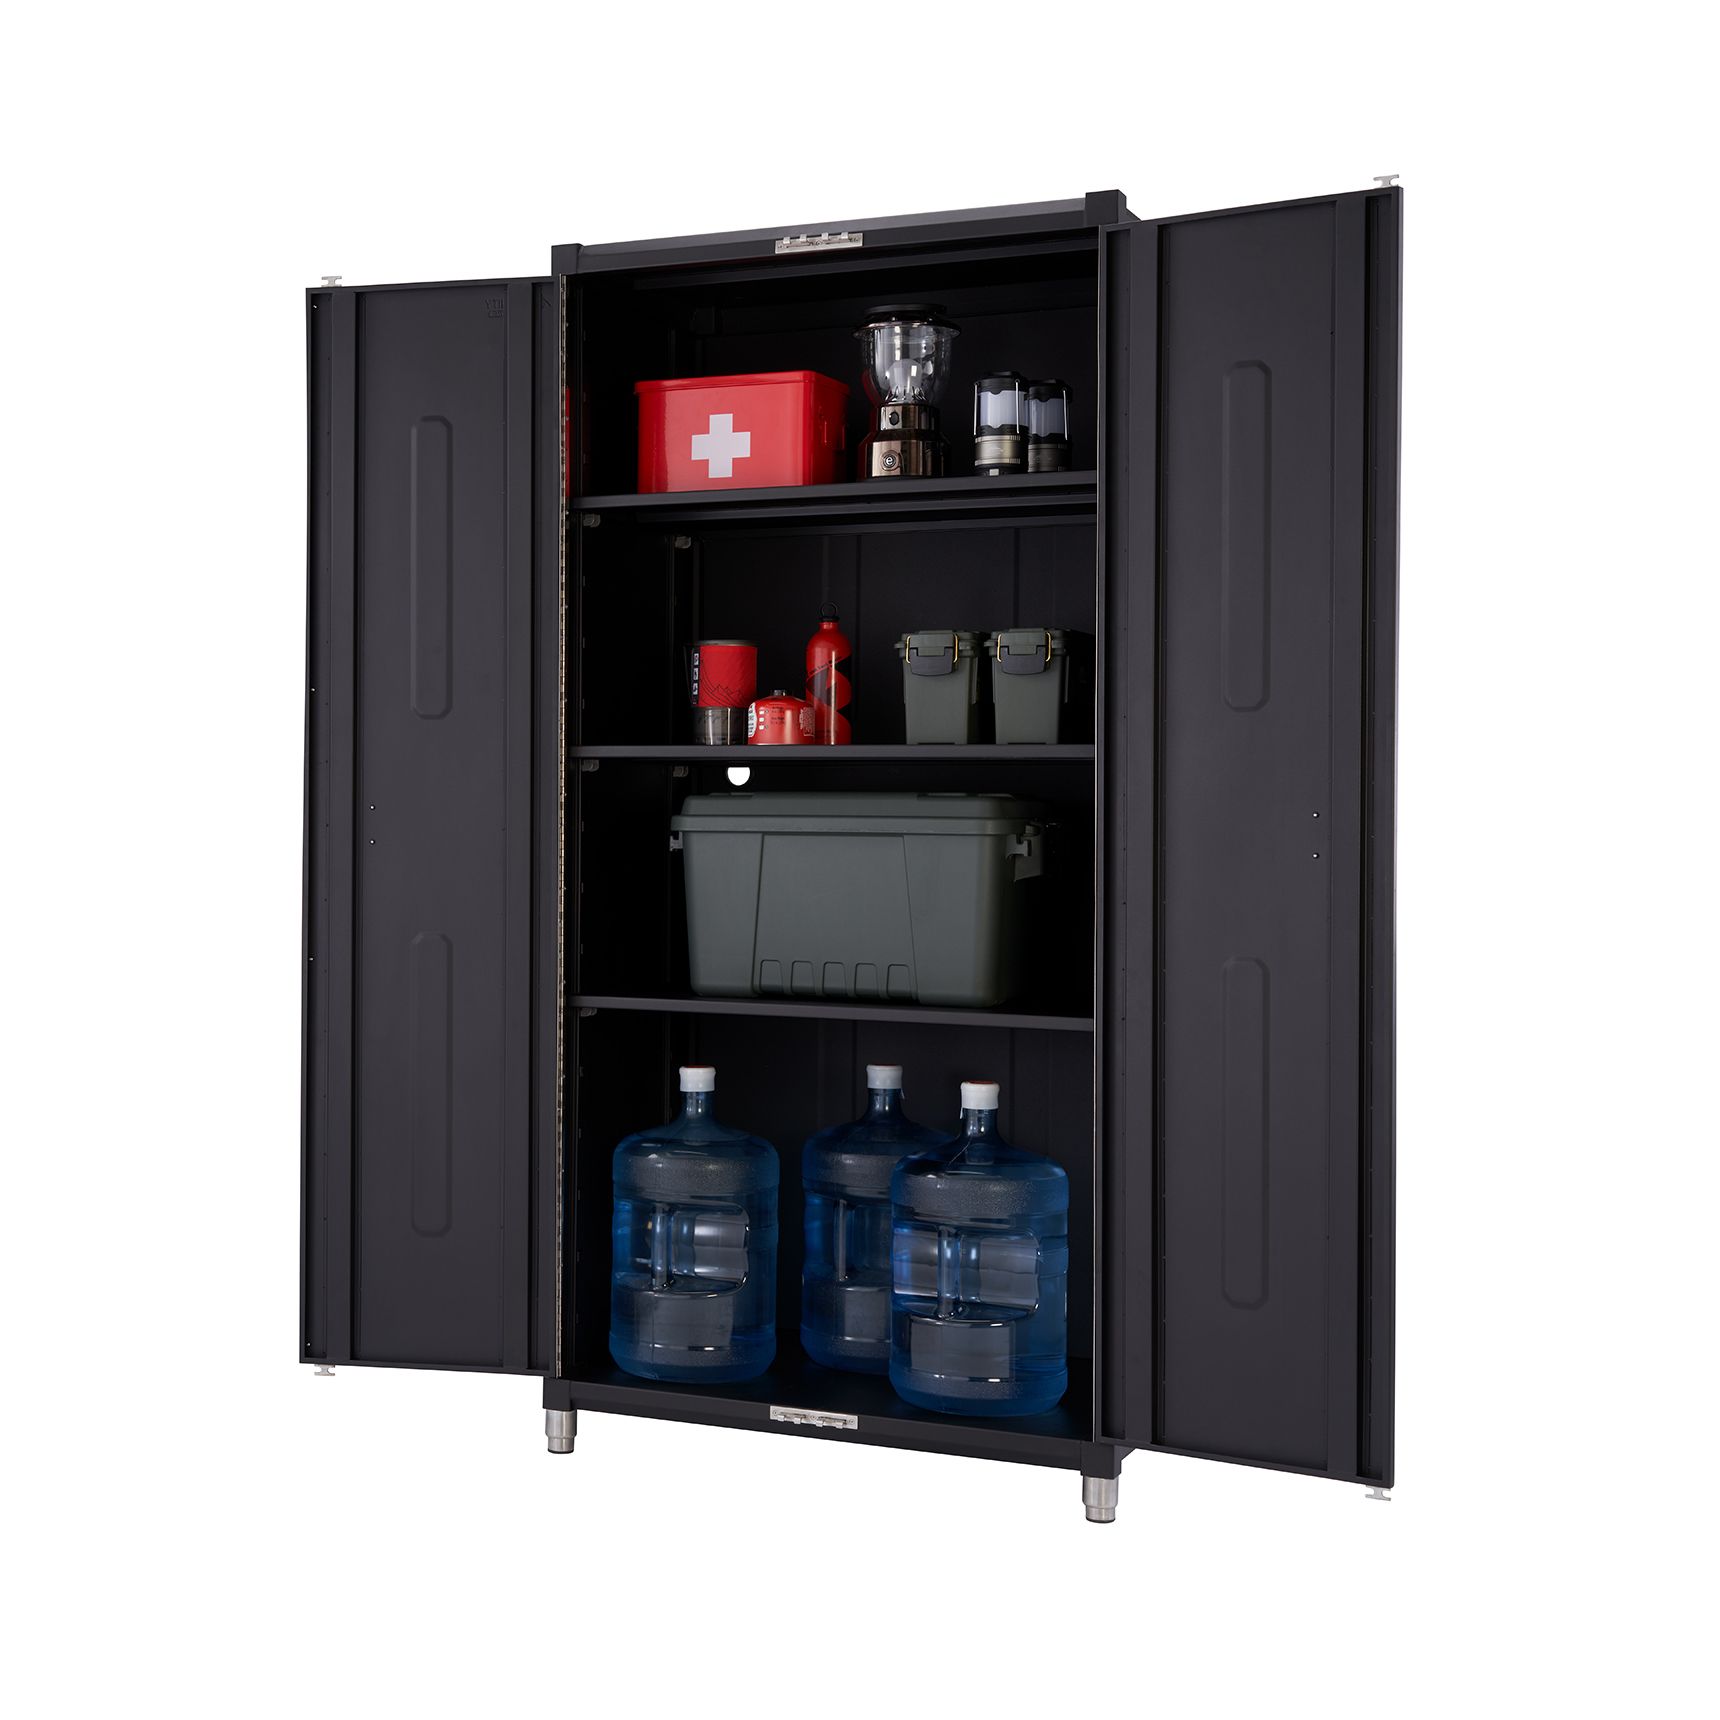 TRINITY PRO 8-Piece Garage Cabinet Set, Black